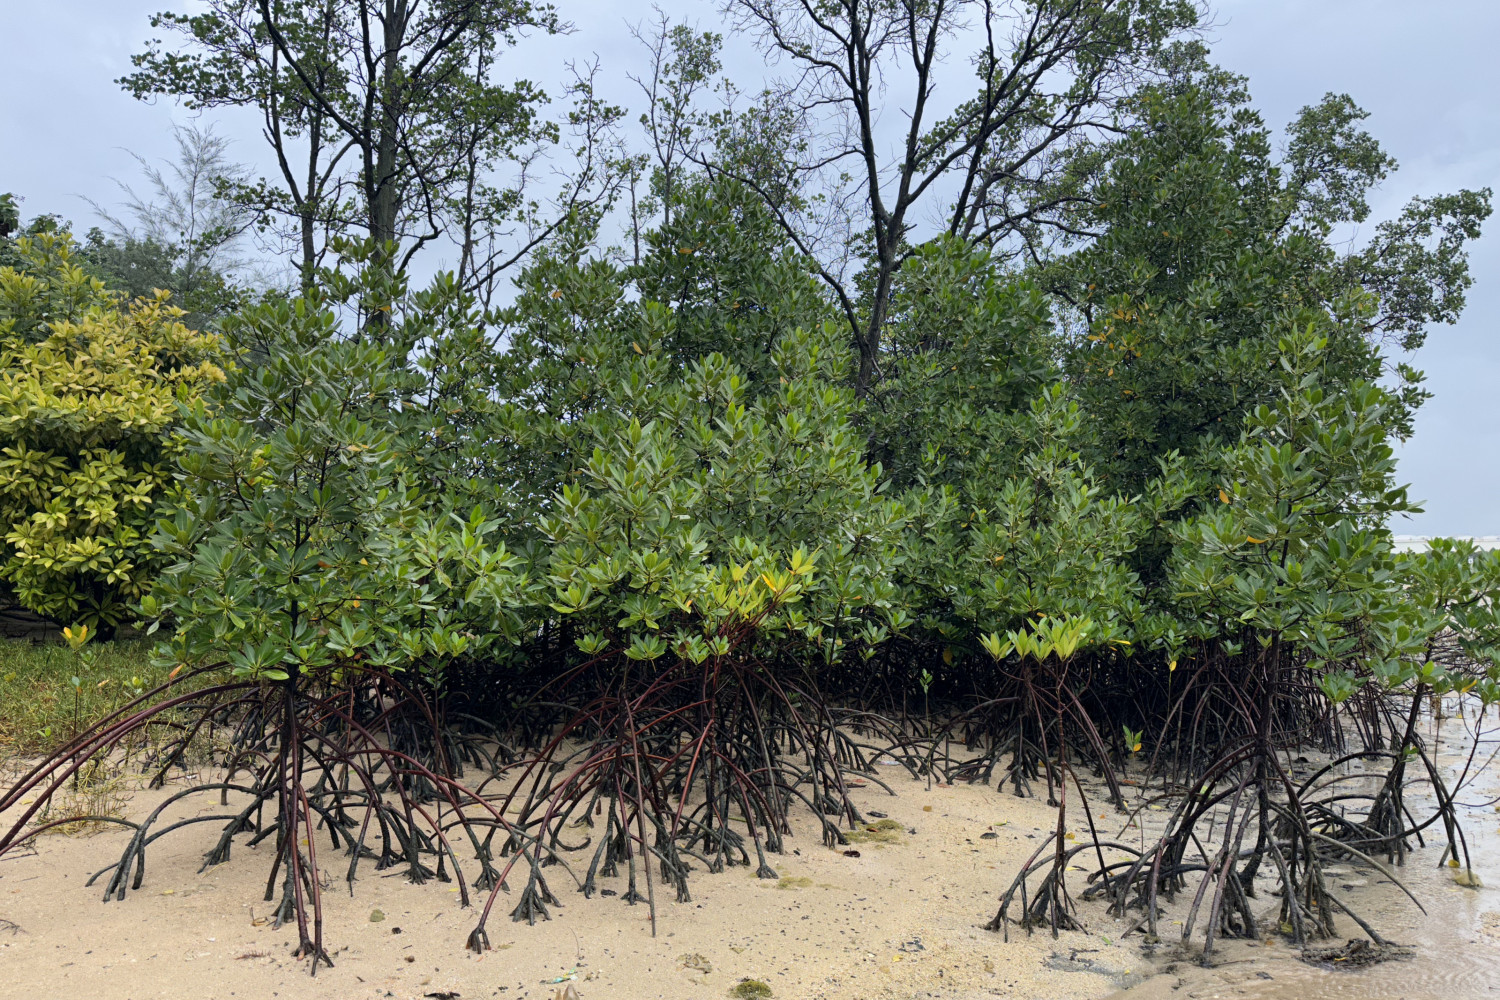 Red Mangrove